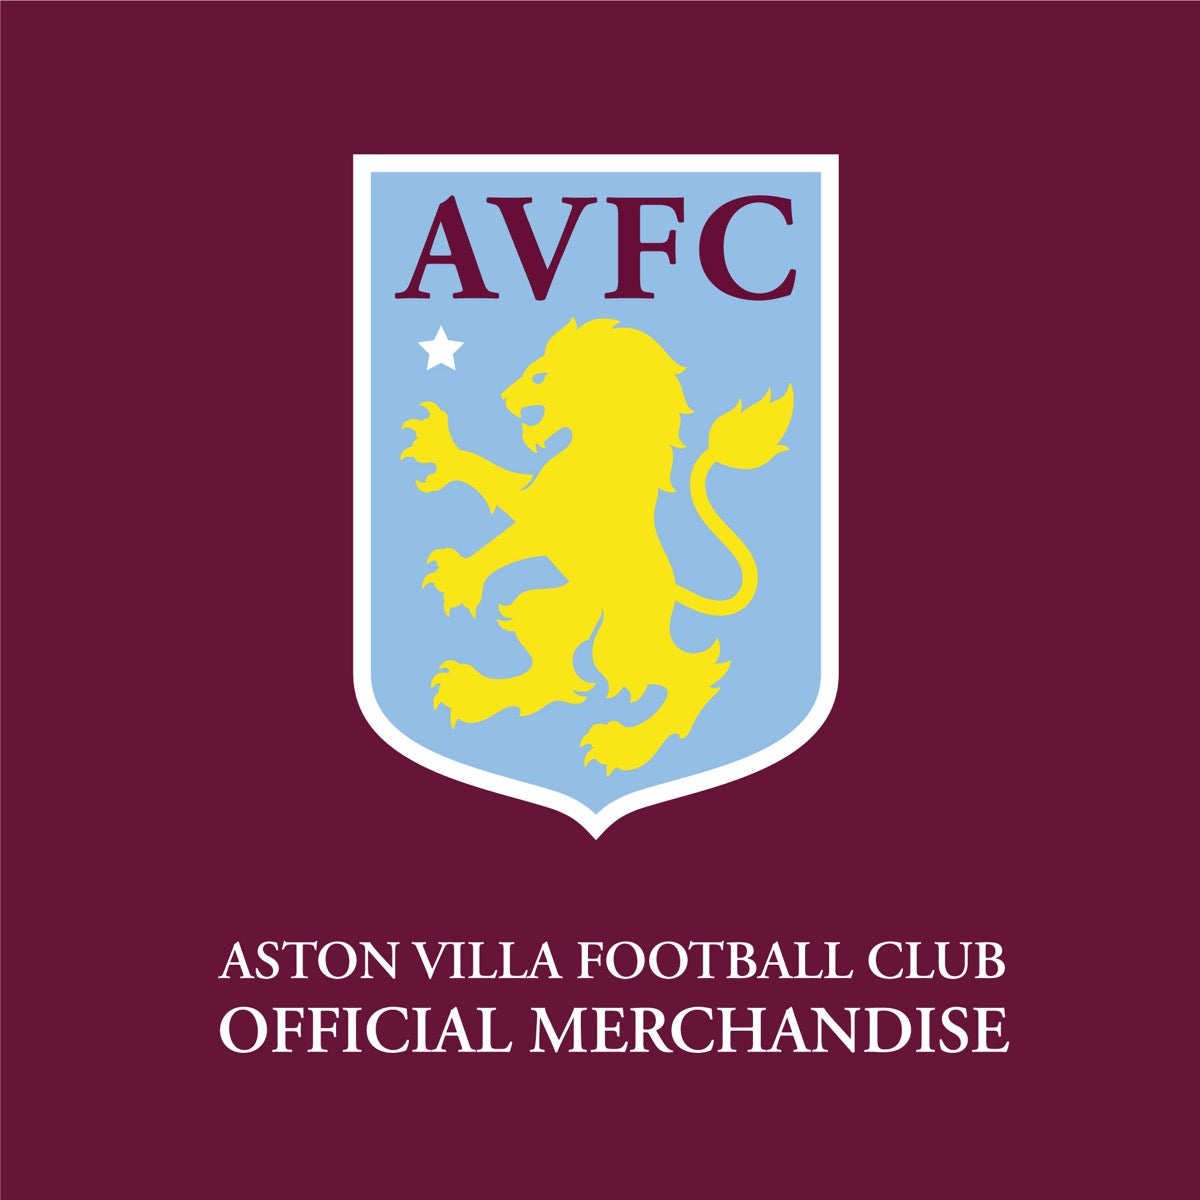 Aston Villa Football Club - Martinez 23-24 Wall Sticker + AVFC Decals